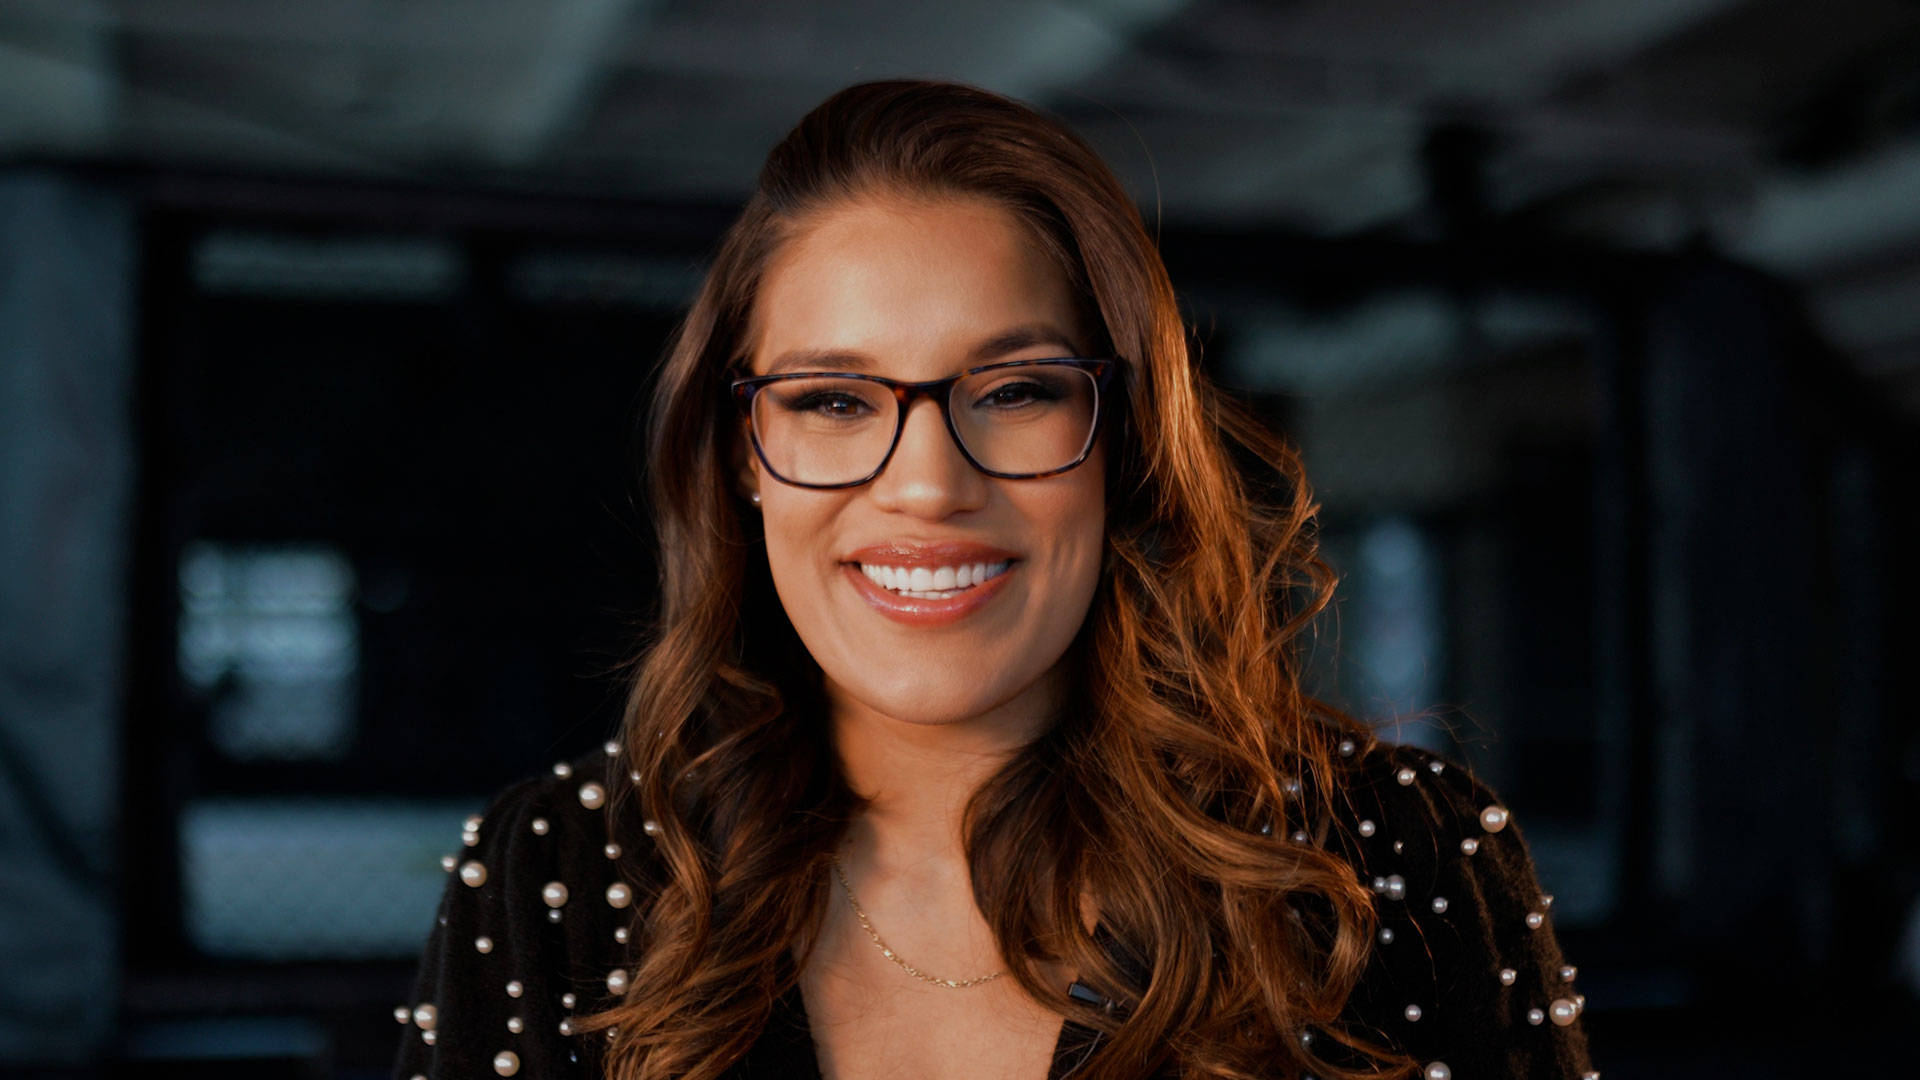 Julianna Peña With Makeup And Eyeglasses Wallpaper